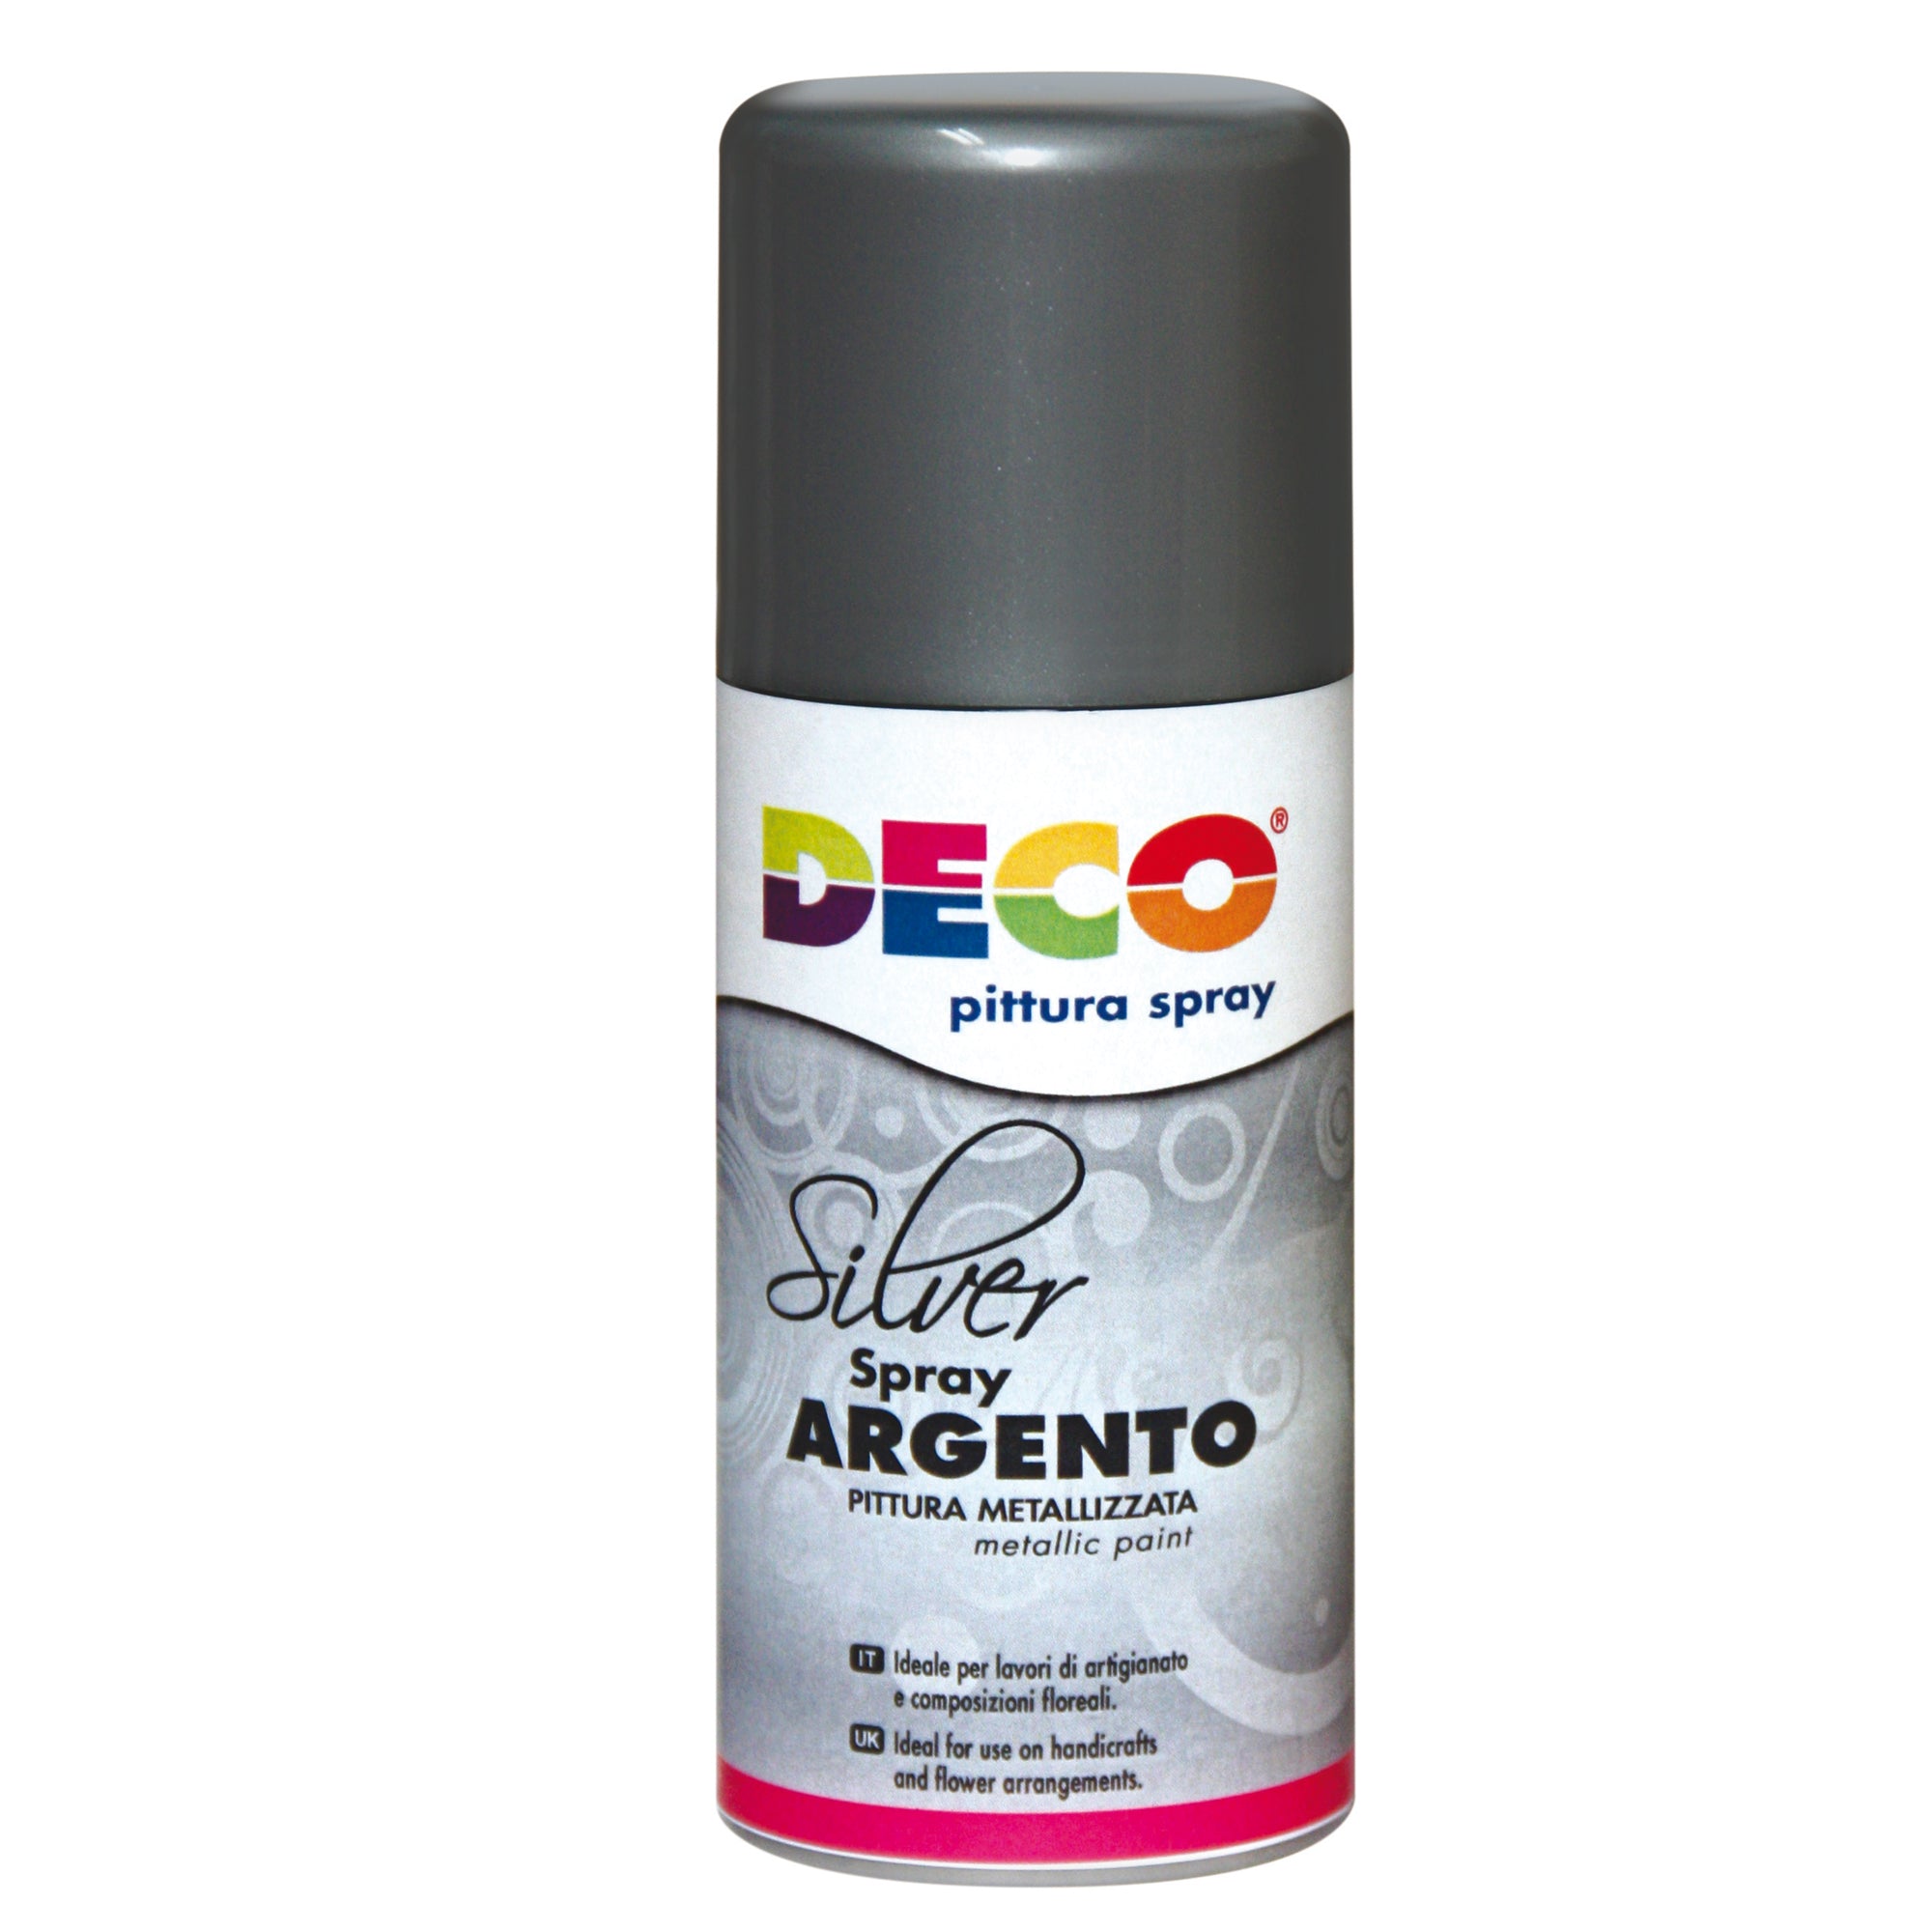 deco-vernice-spray-argento-150ml-615-2